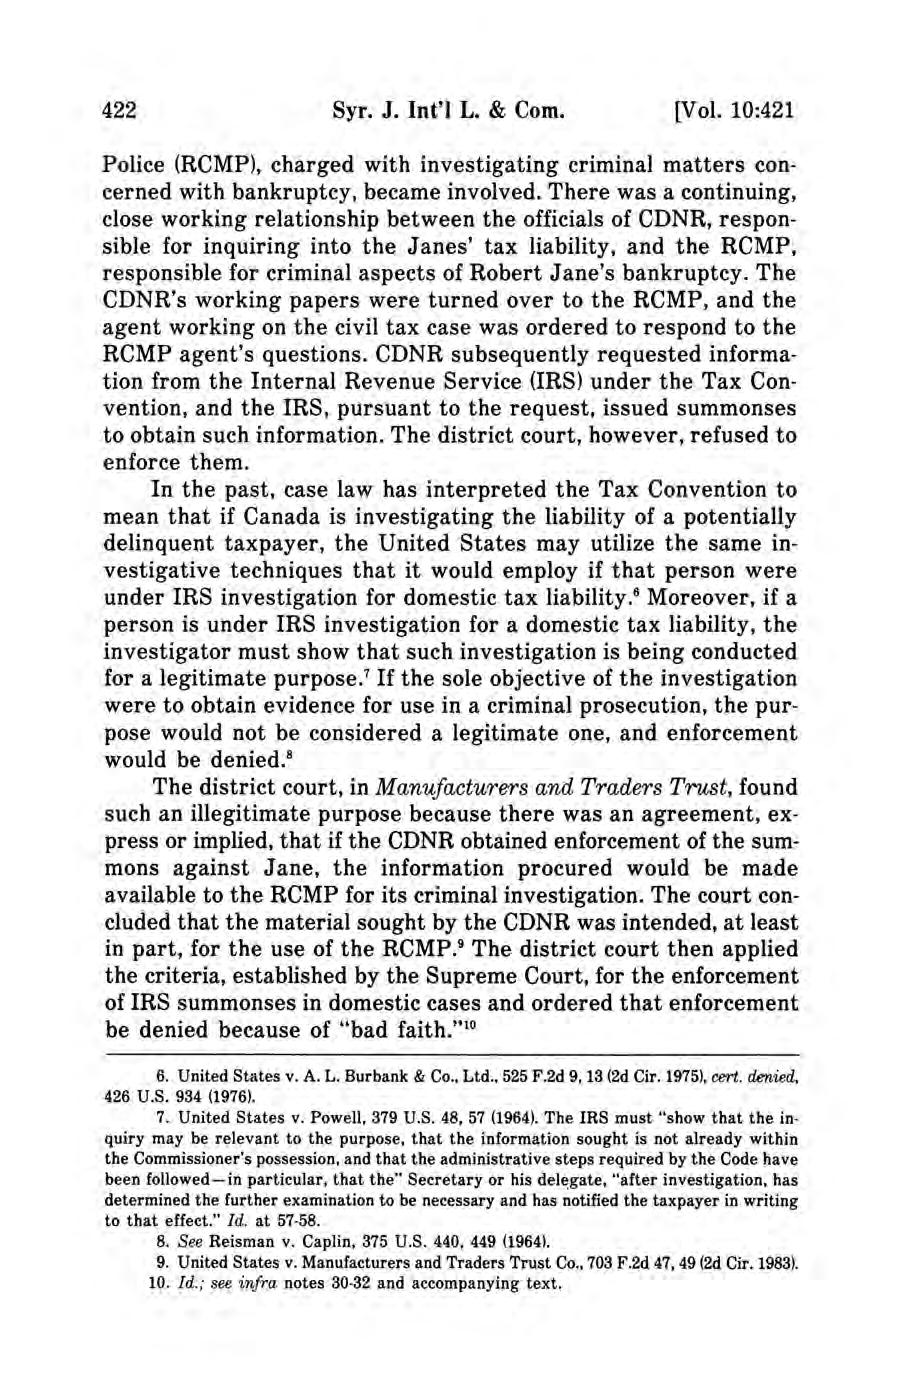 Syracuse Journal of International Law and Commerce, Vol. 10, No. 2 [1983], Art. 9 422 Syr. J. lnt'l L. & Com. [Vol.